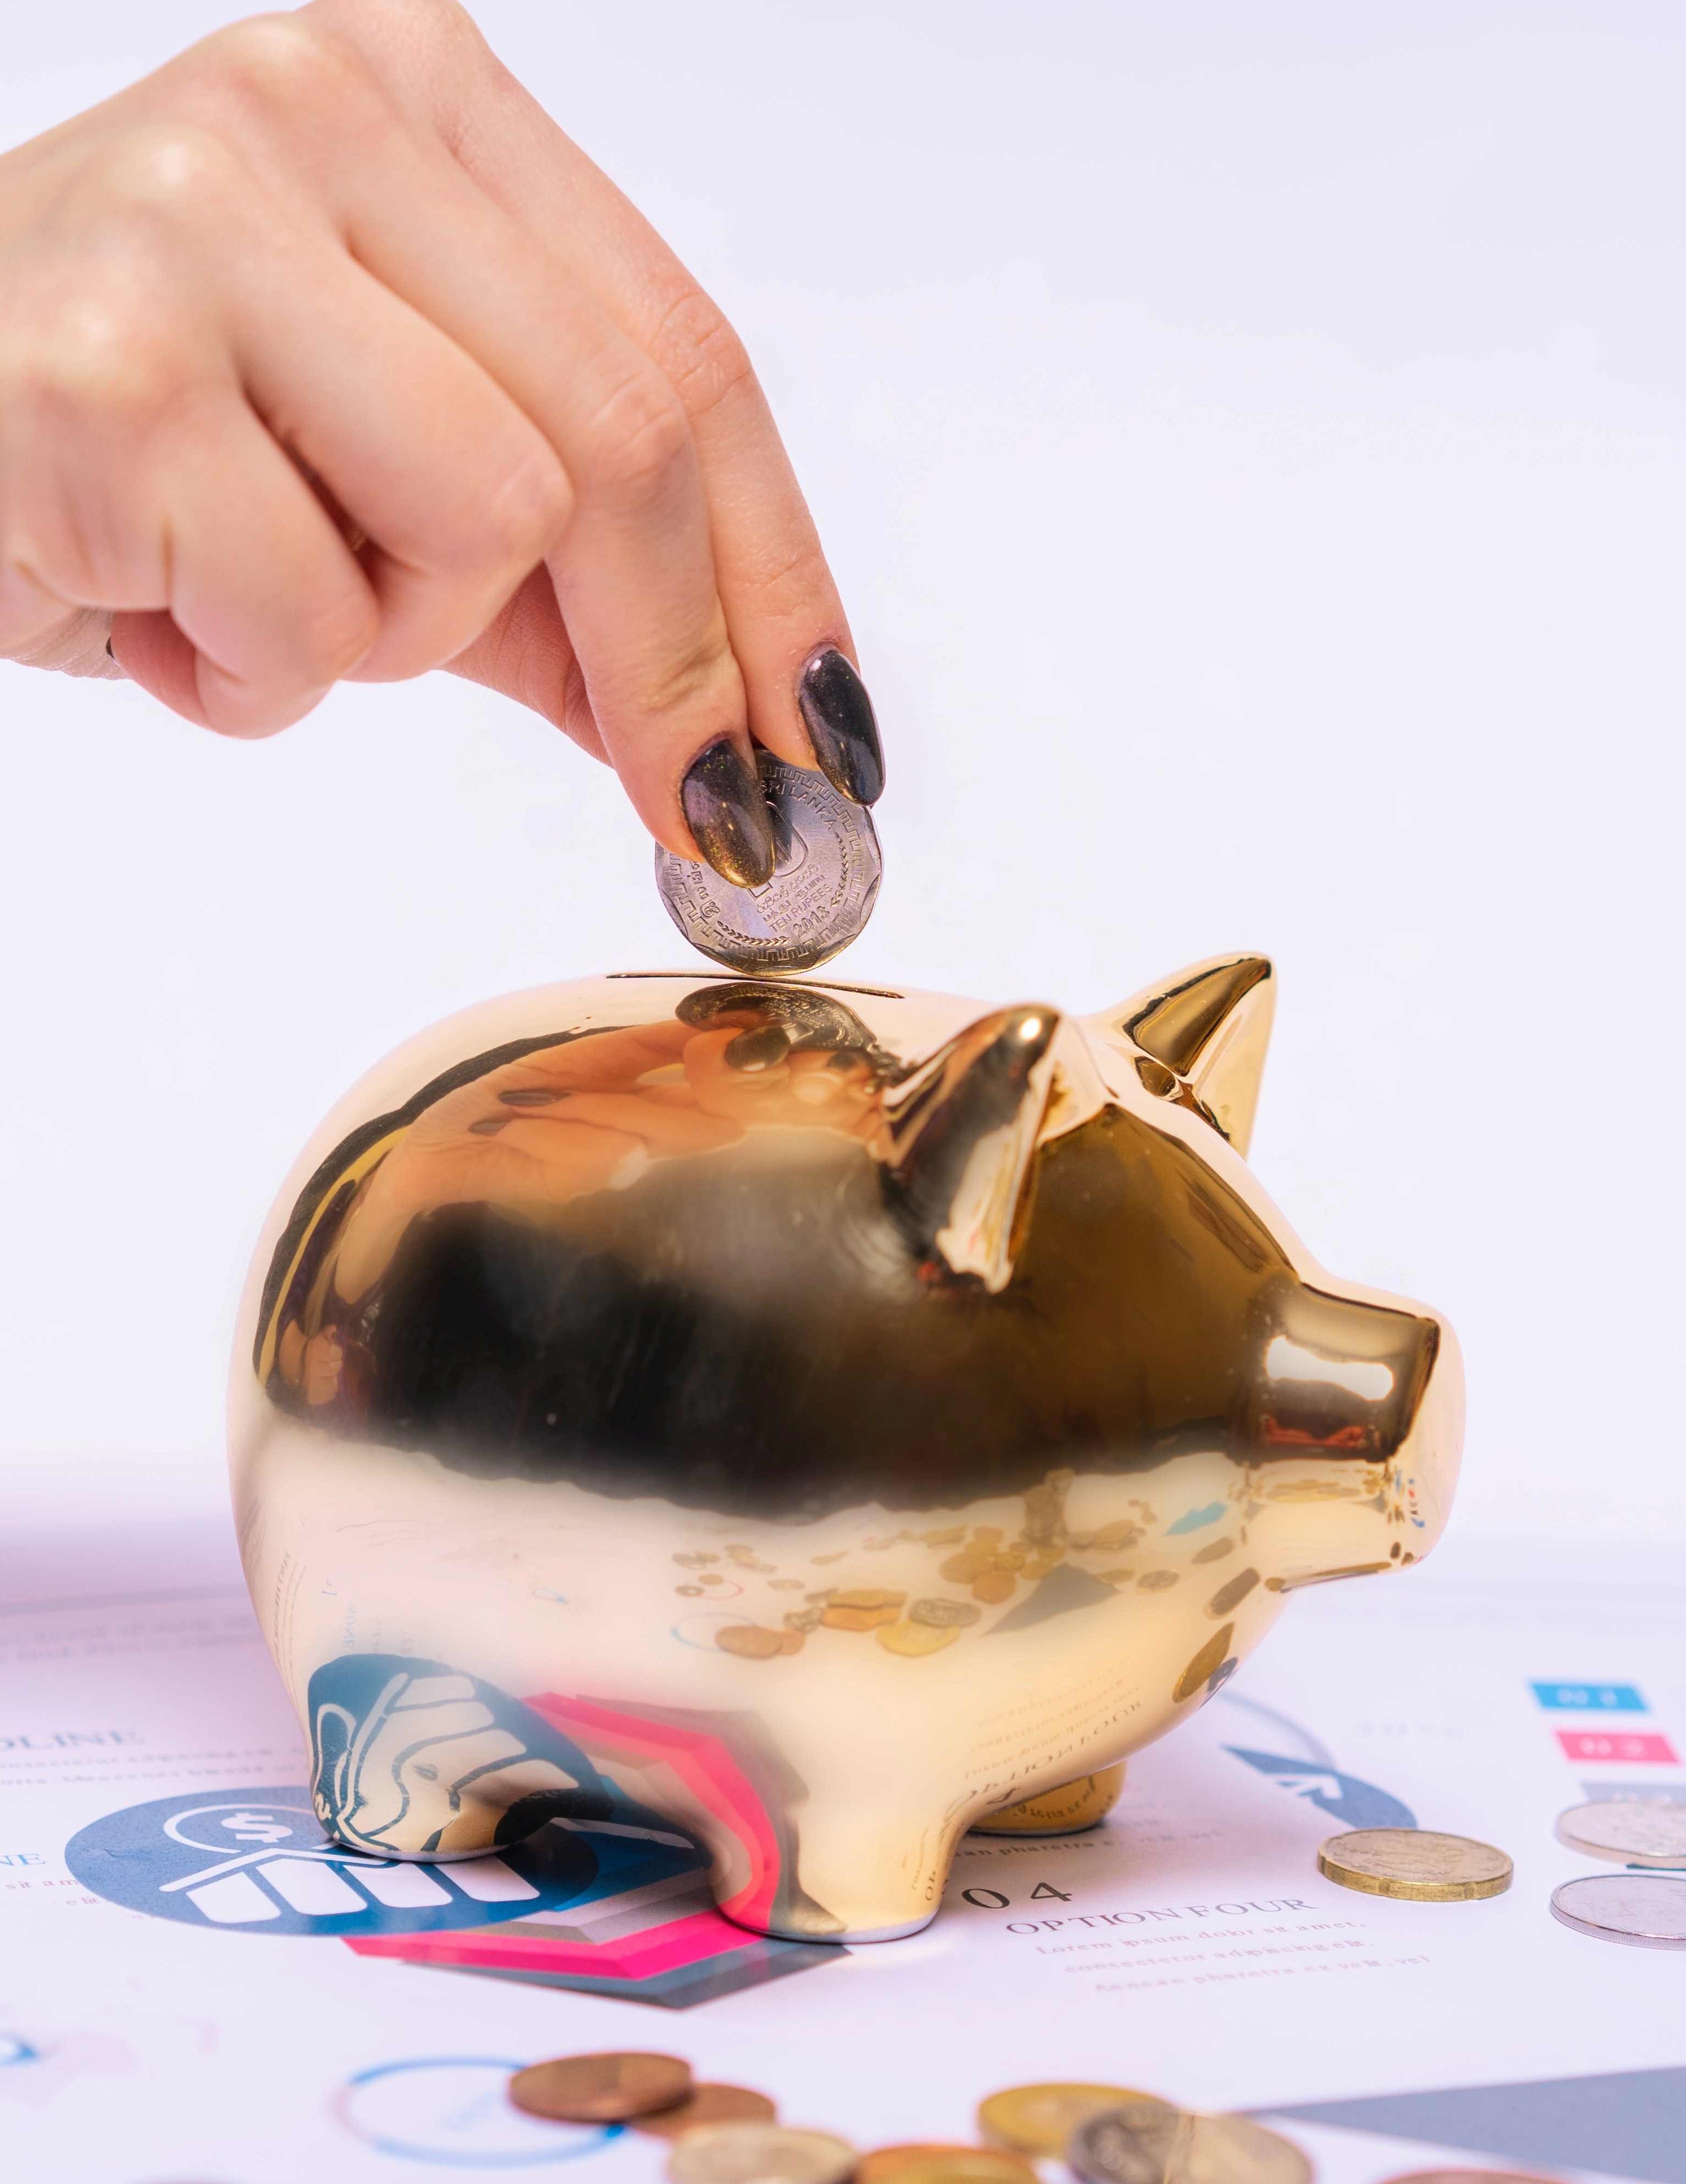 Savings in a piggy bank